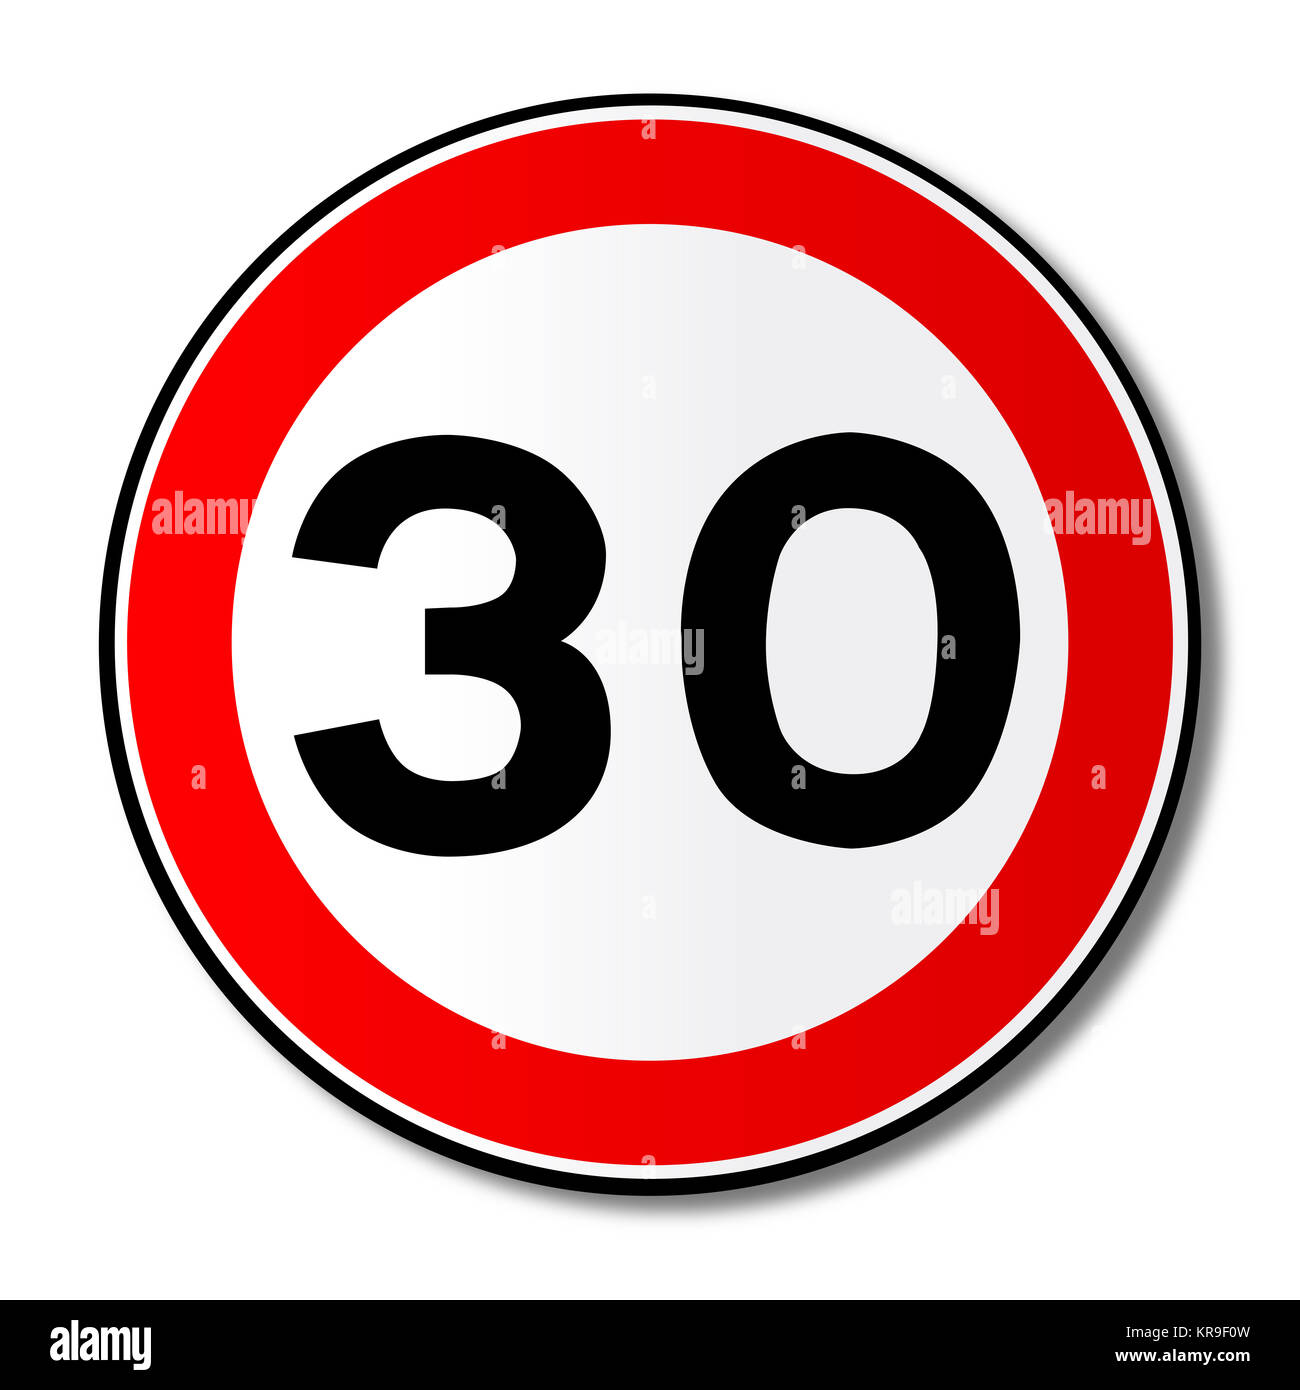 30 MPH Limit Traffic Sign Stock Photo